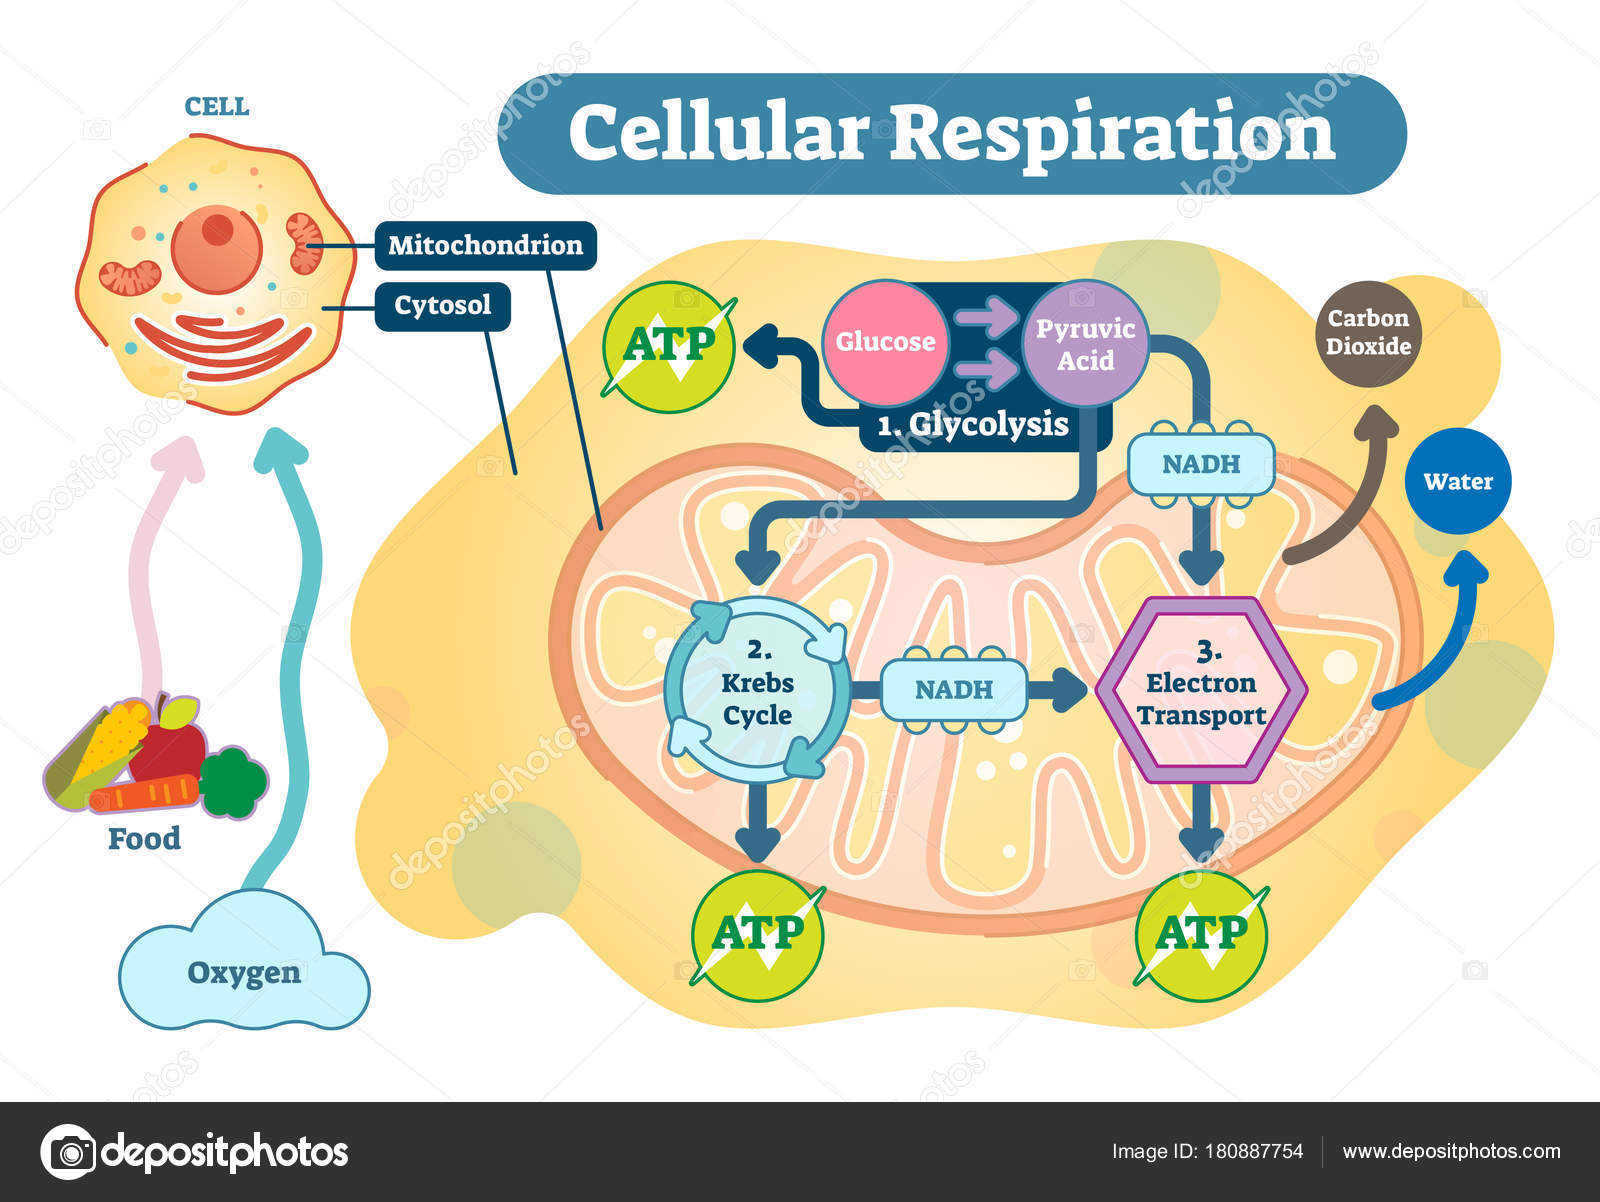 Cellular Respiration Diagram Cellular Respiration Medical Vector Illustration Diagram